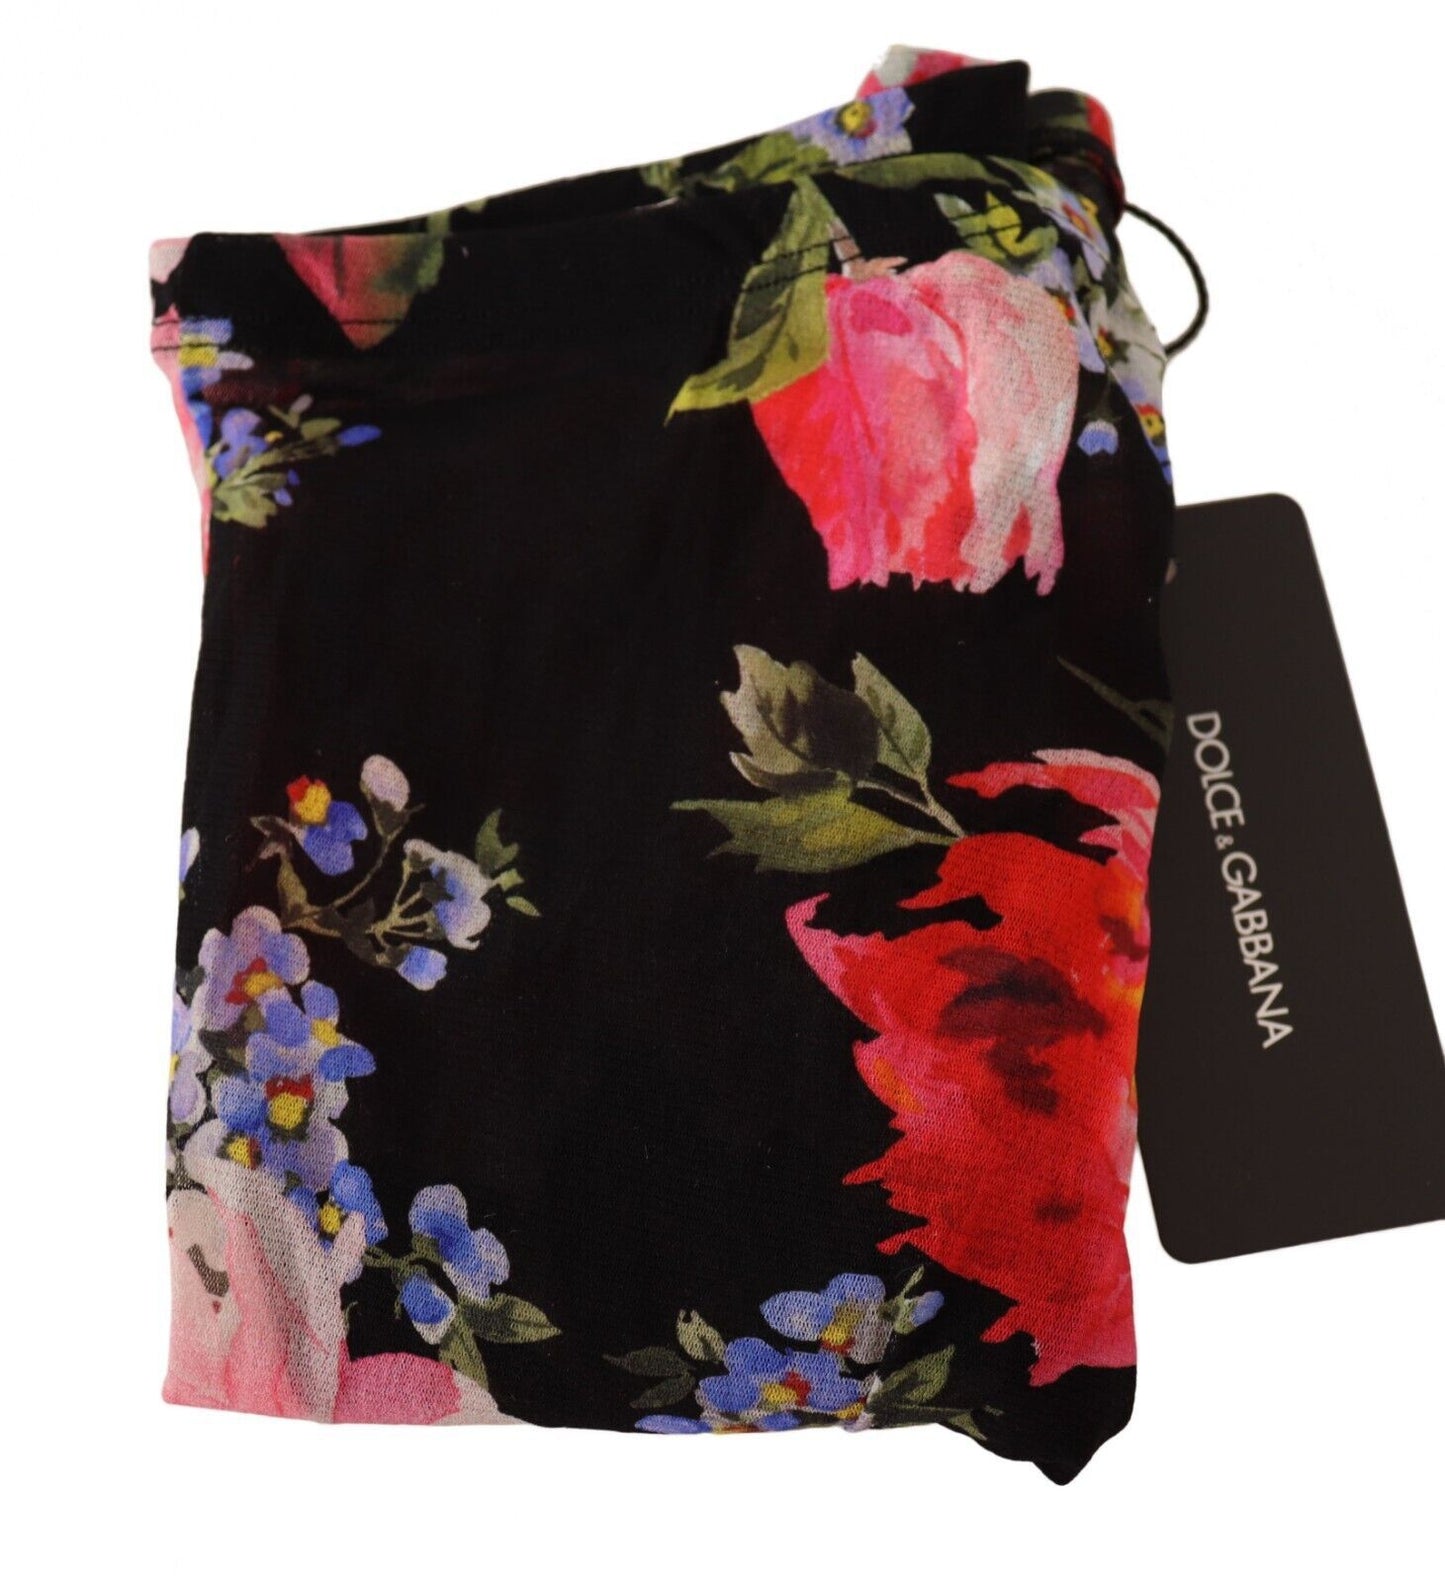 Calze a stampa floreale nera Dolce & Gabbana